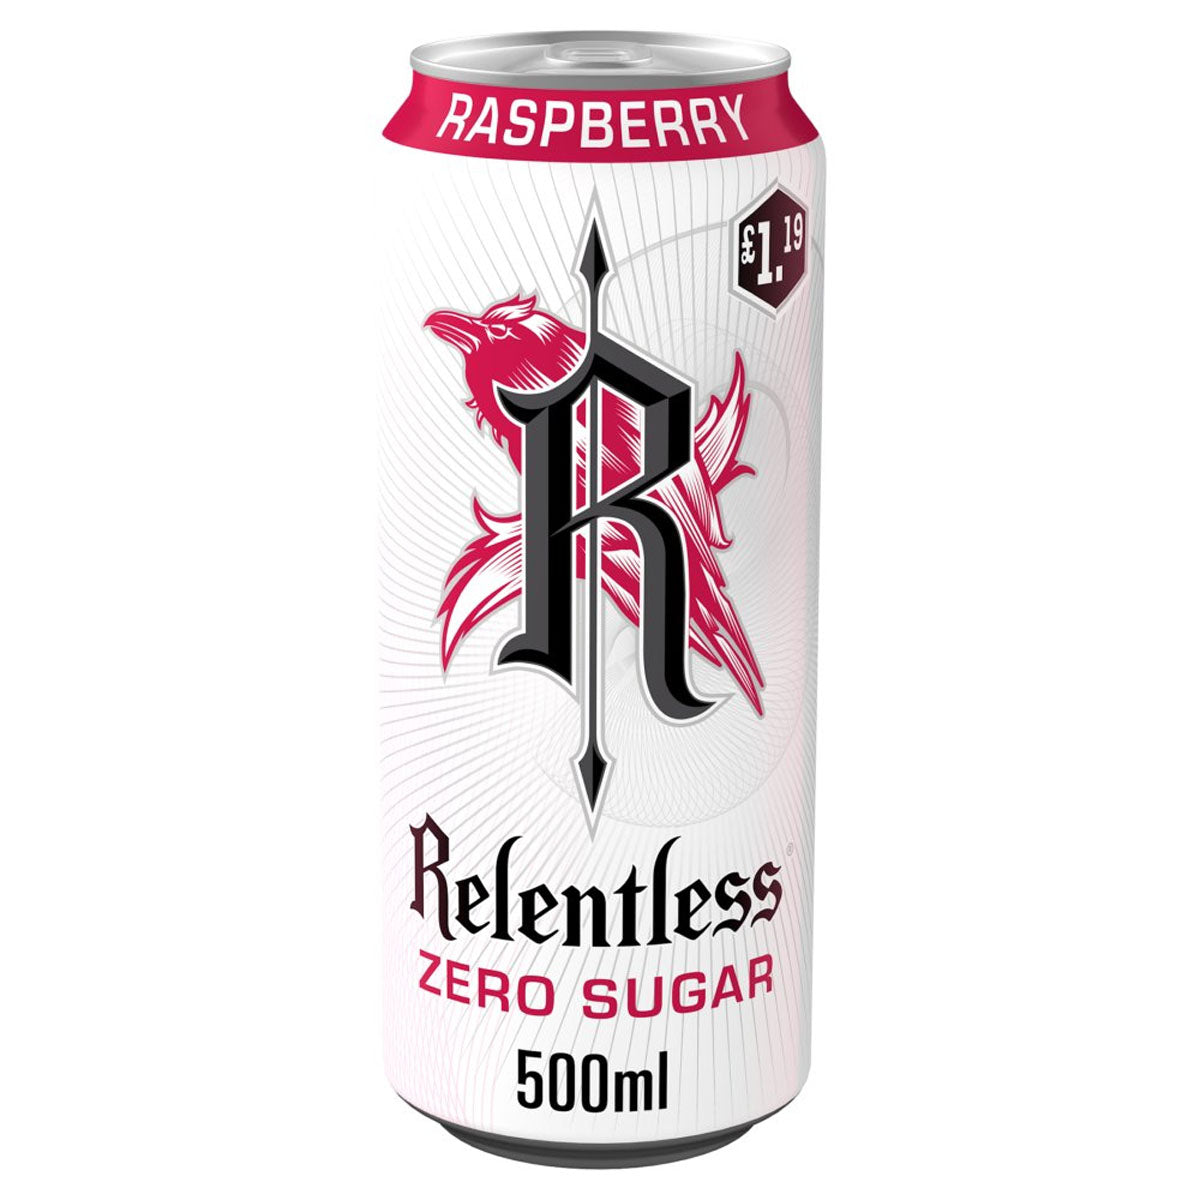 A can of Relentless - Zero Sugar Raspberry - 500ml.